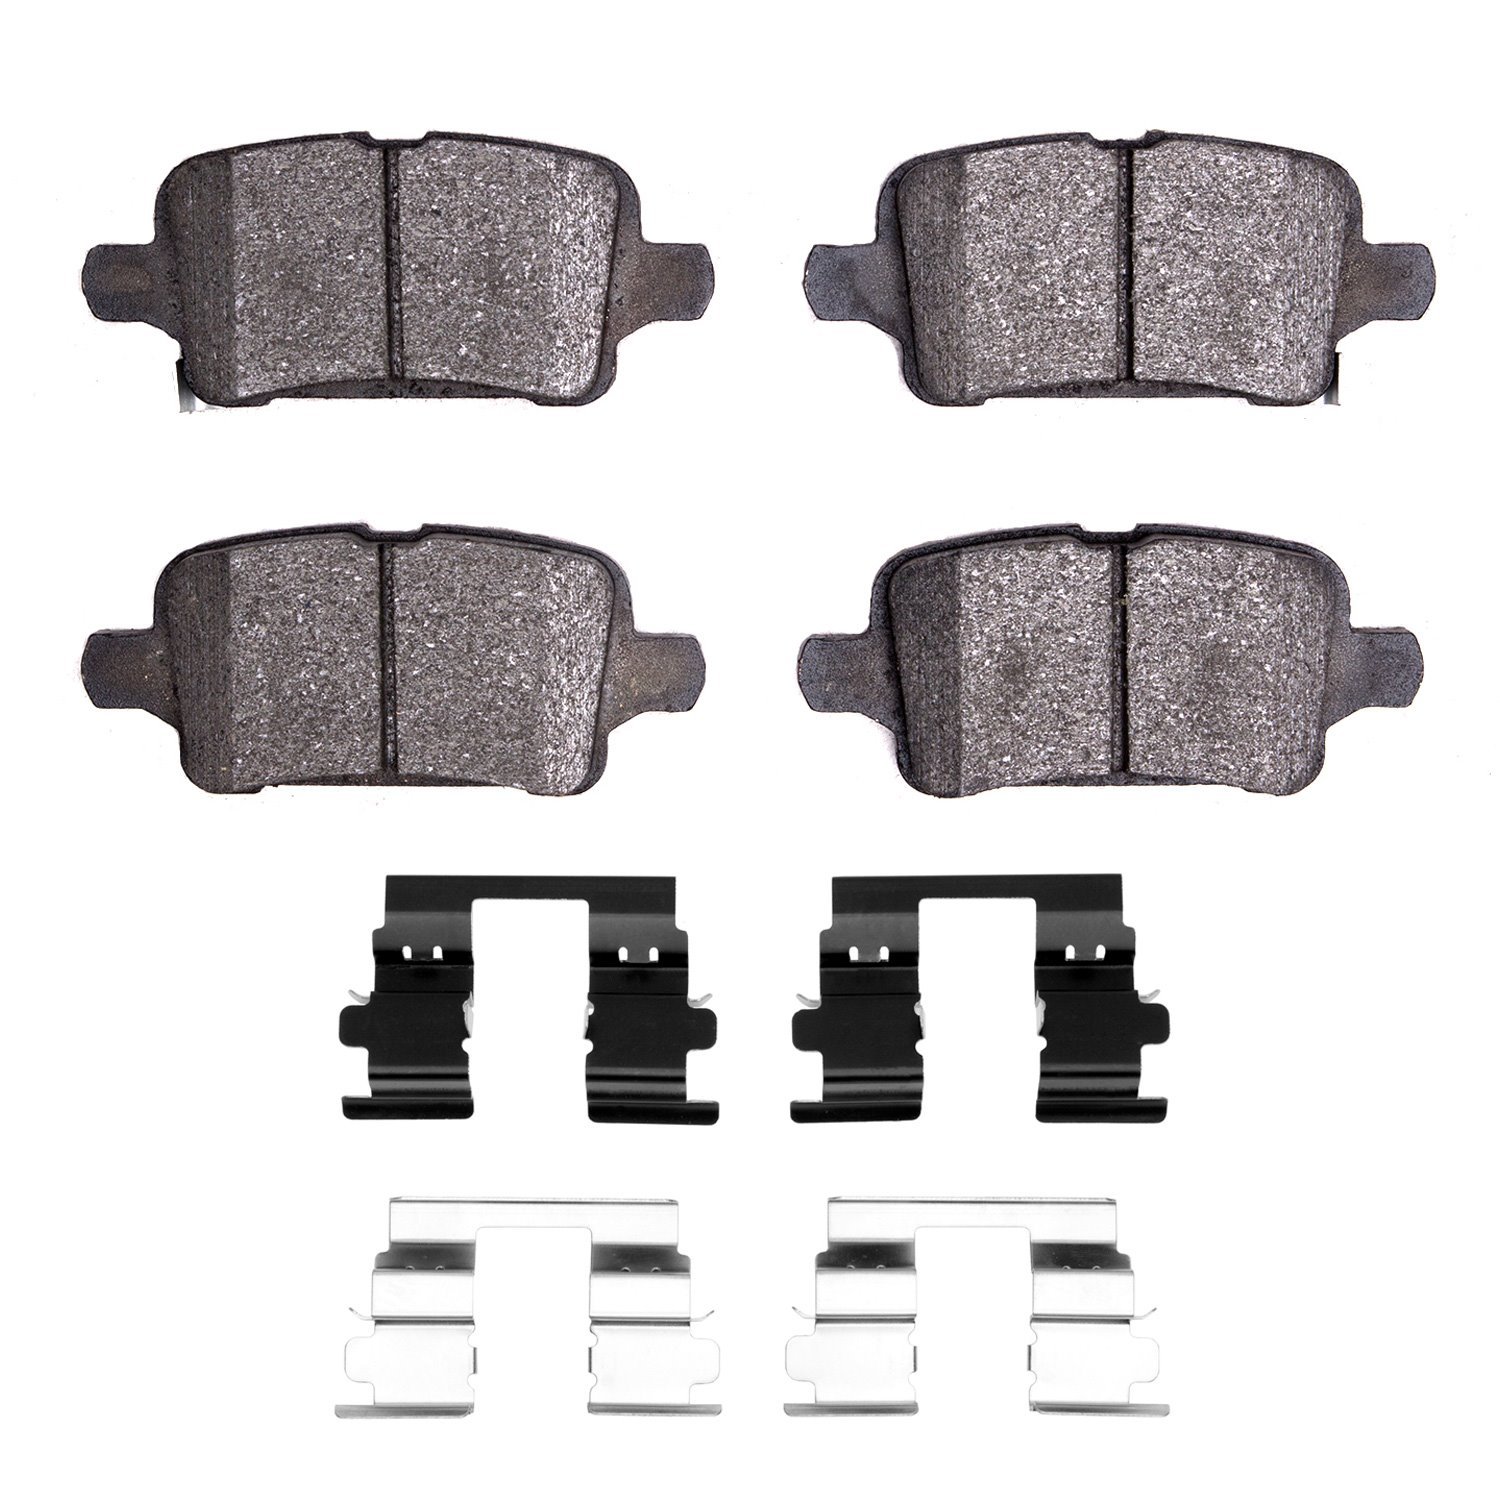 1310-1857-01 3000-Series Ceramic Brake Pads & Hardware Kit, Fits Select GM, Position: Rear